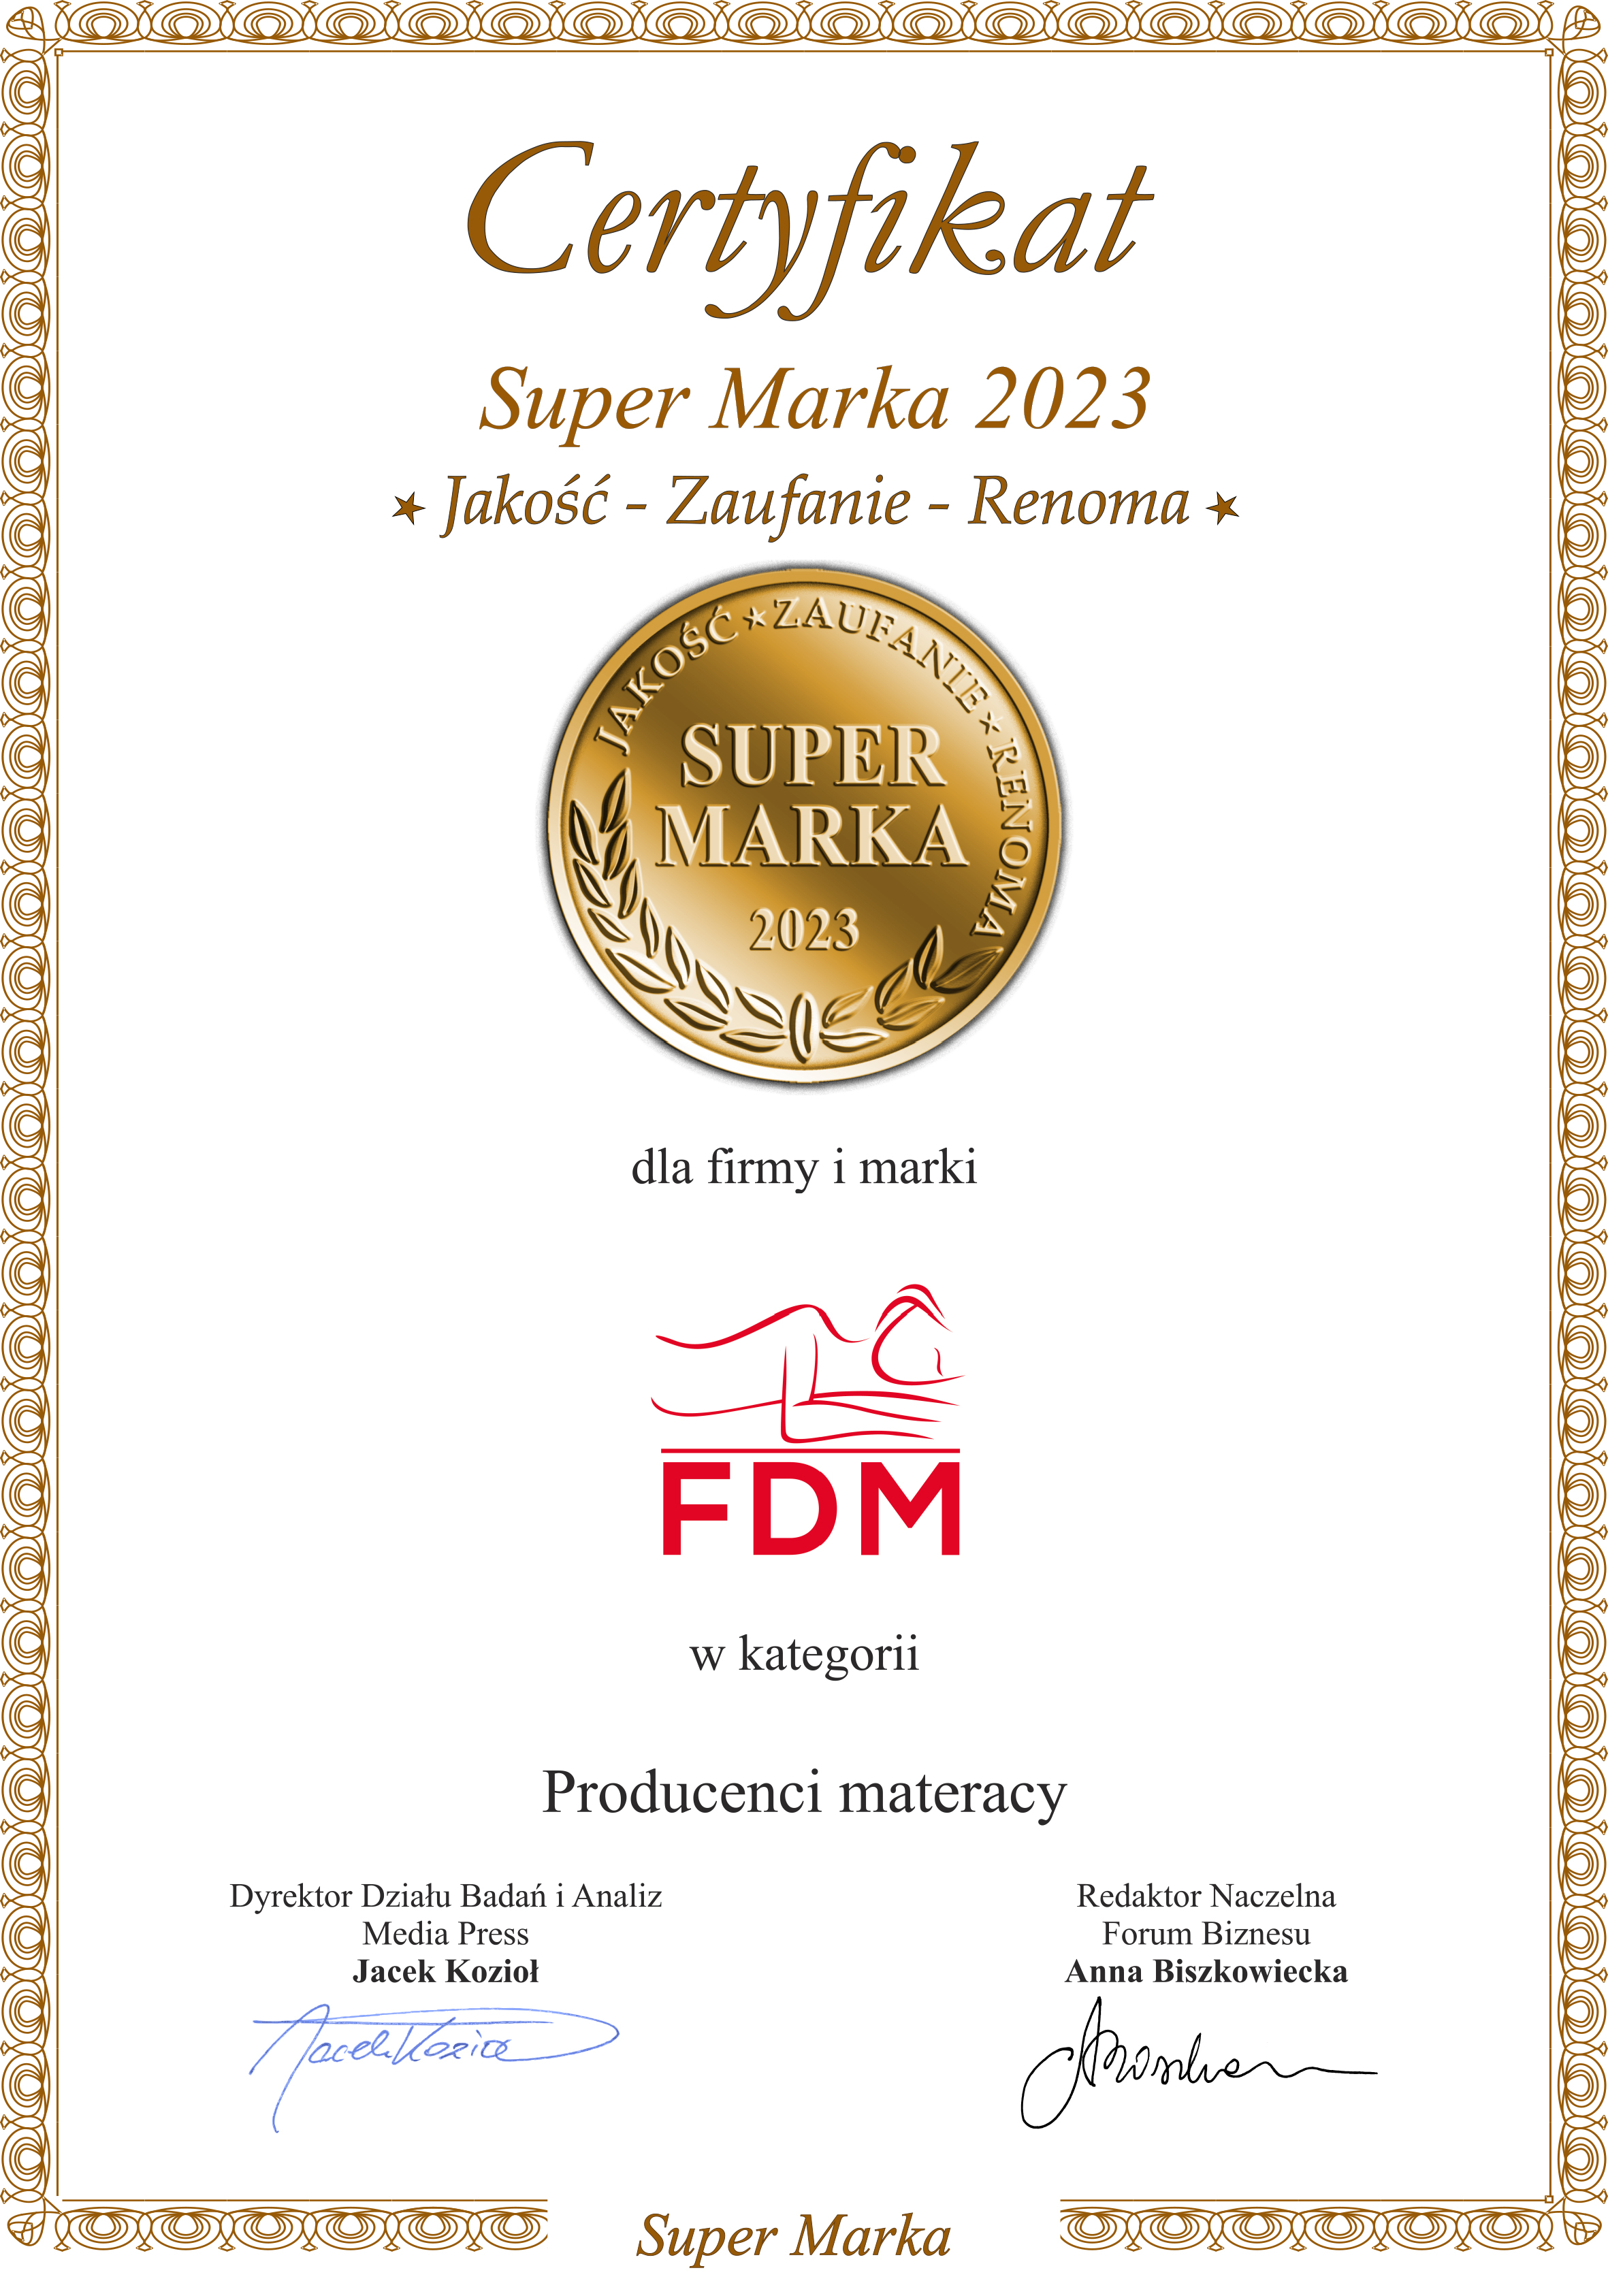 Certyfikat Super Marka 2023 dla FDM